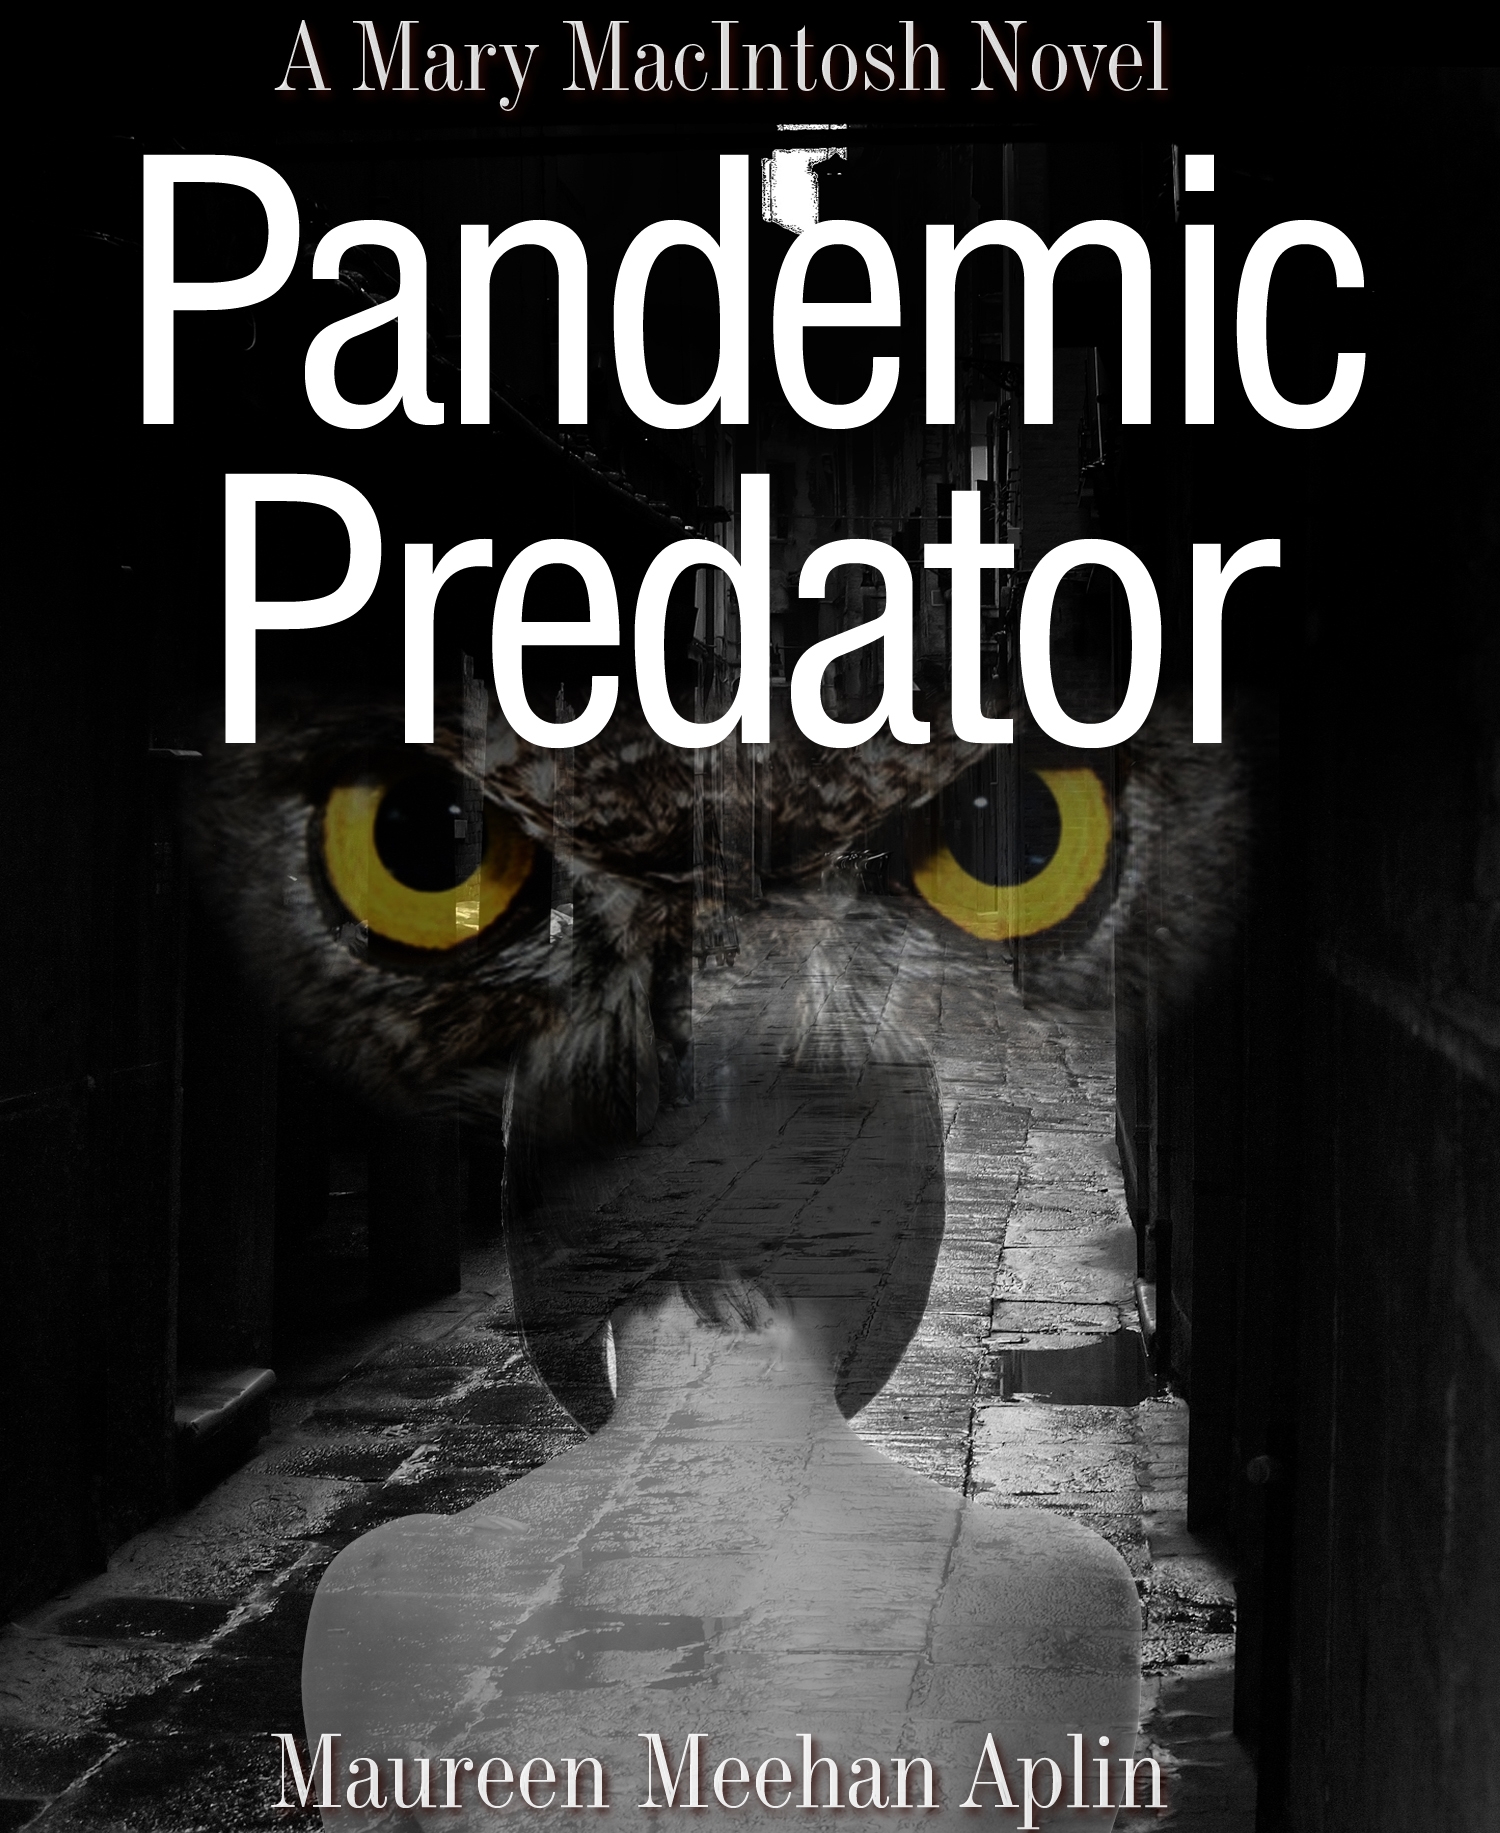 Pandemic Predator, a Mary MacIntosh novel